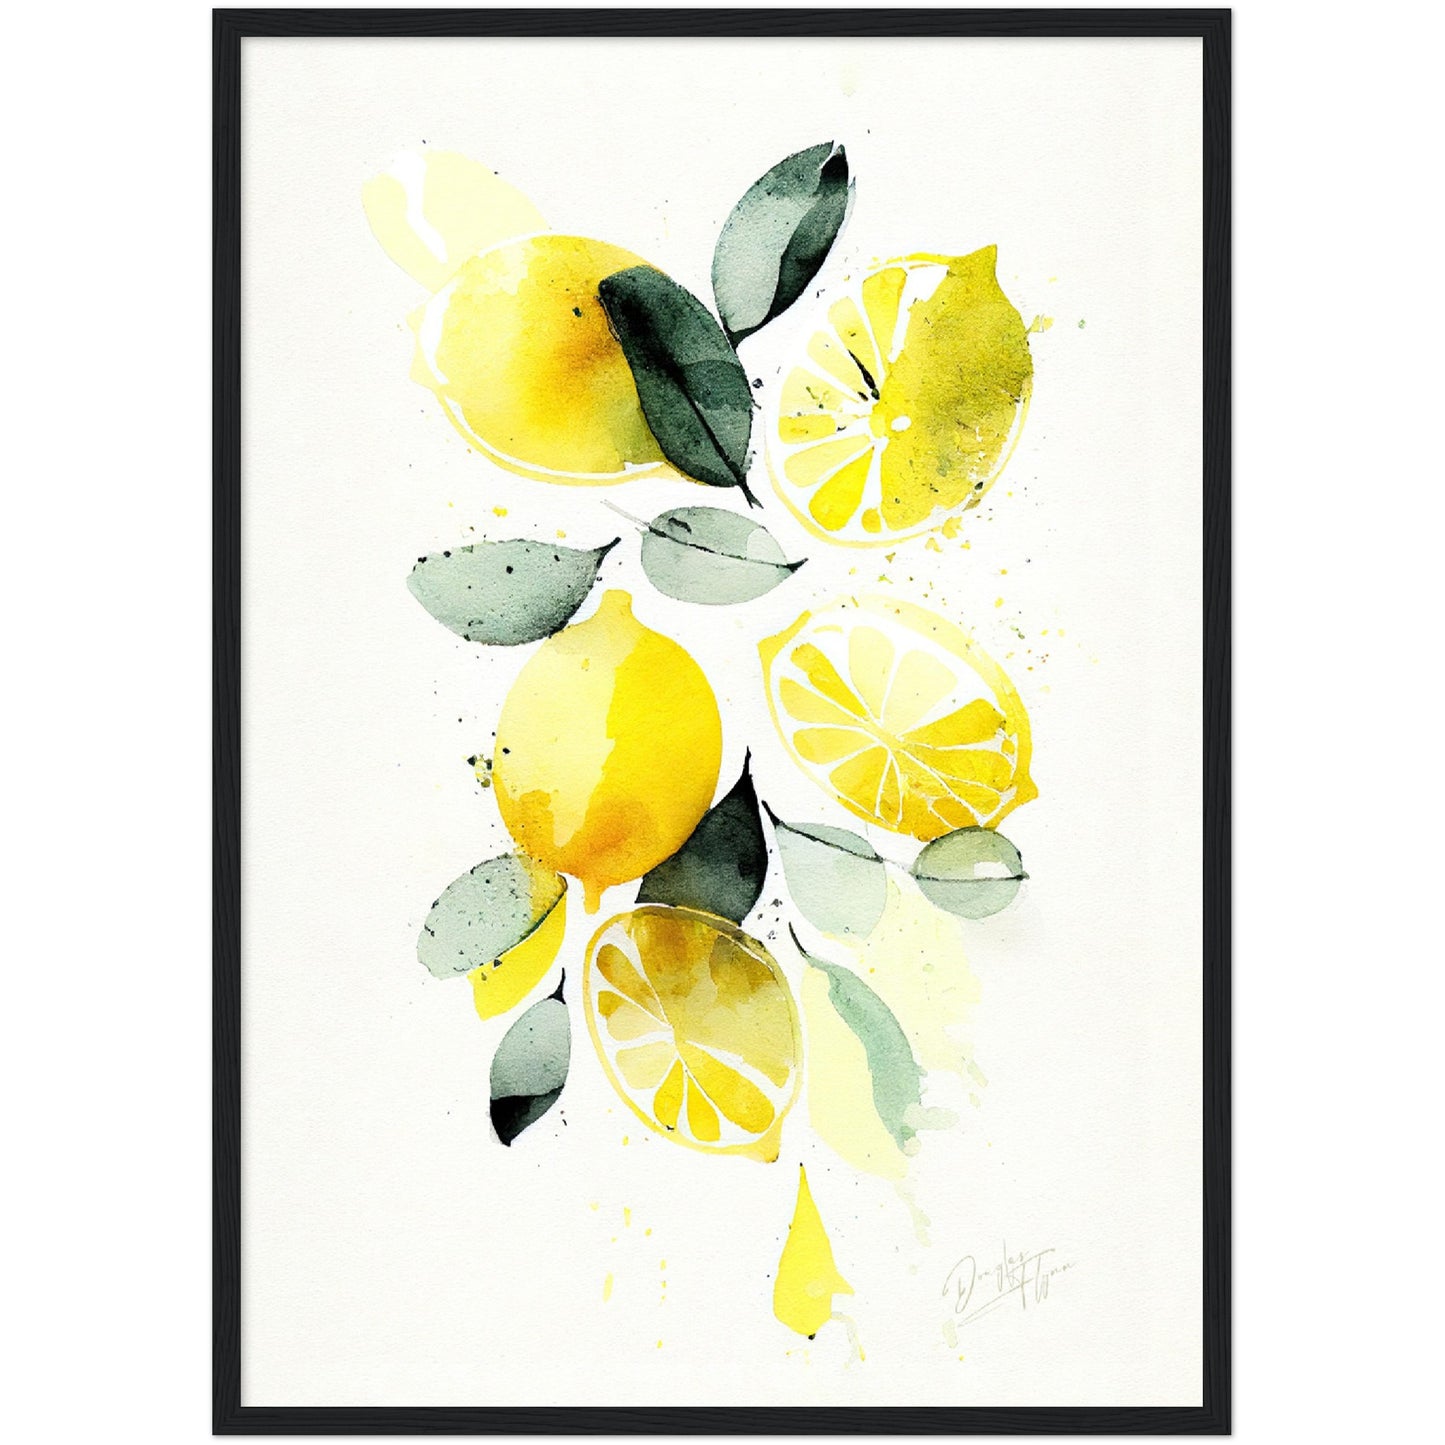 »Lemon Tranquil Tones« retro poster